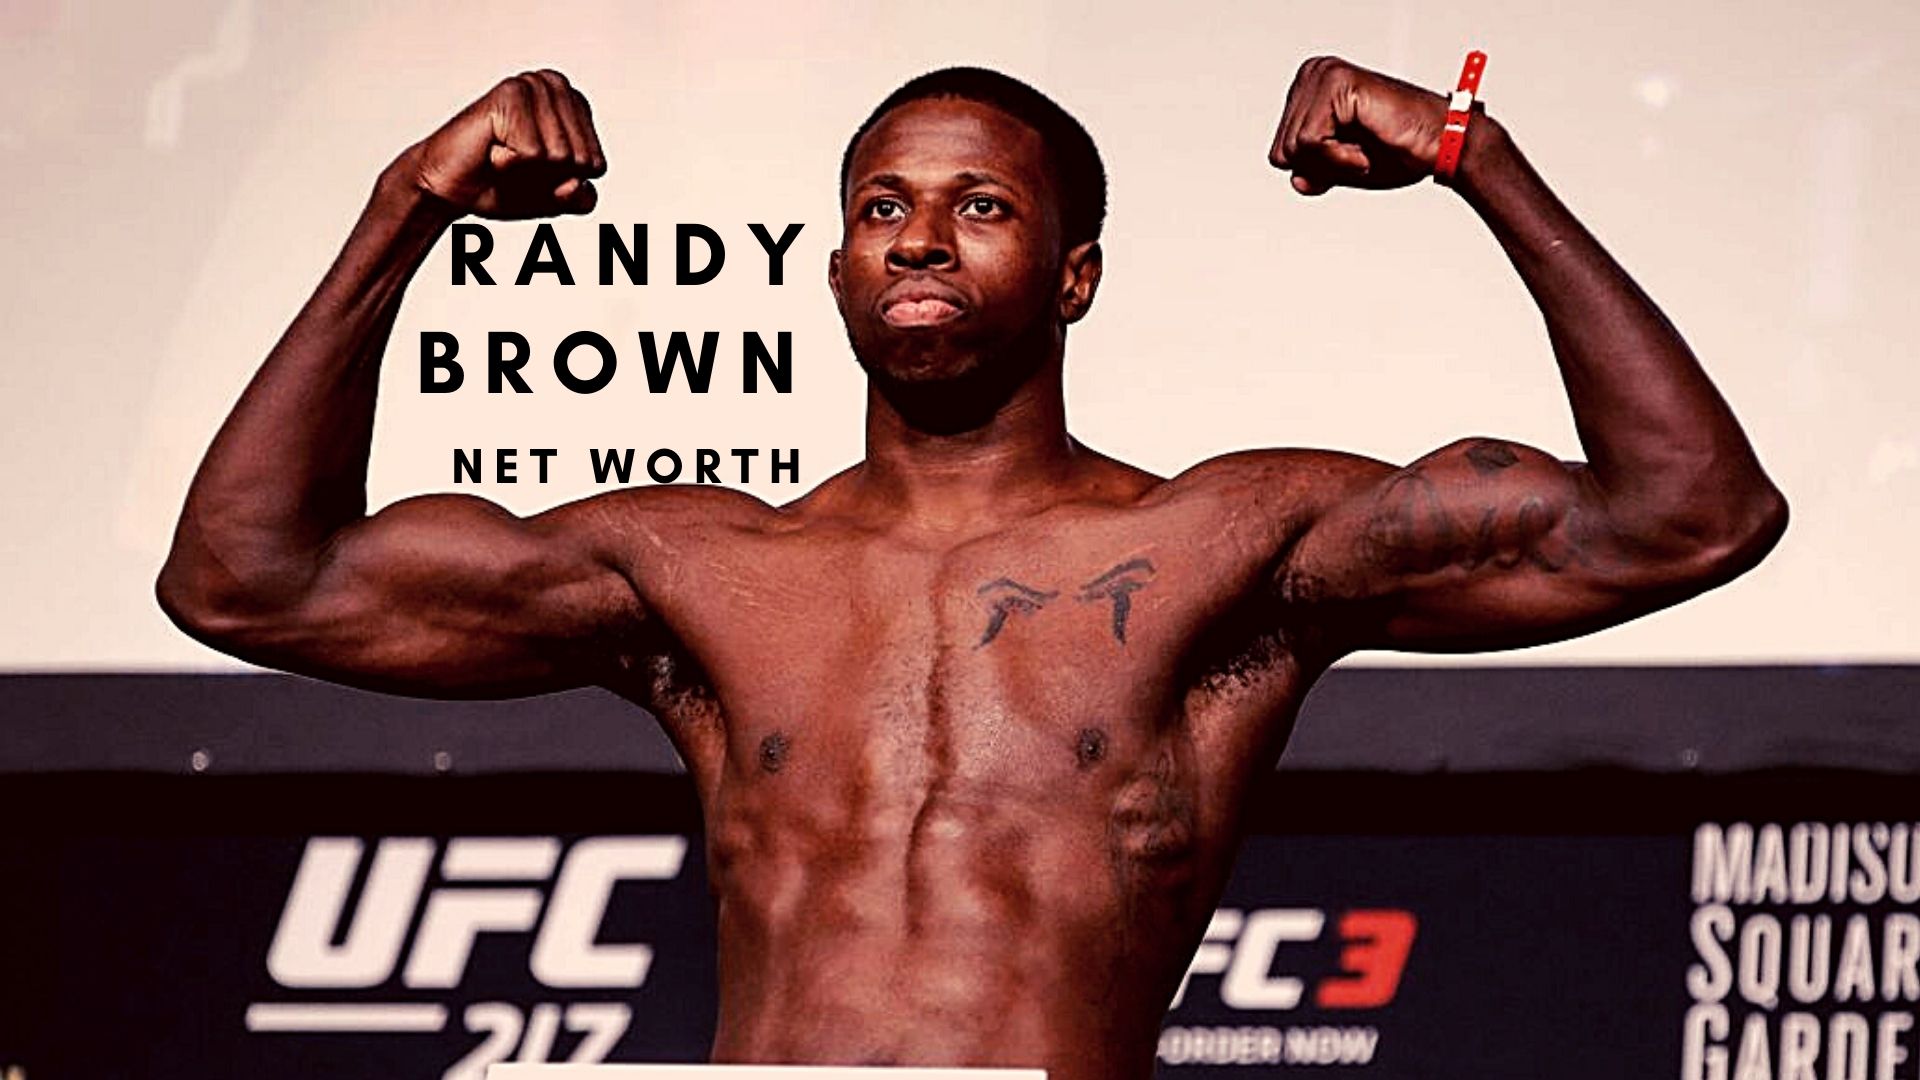 Randy brown